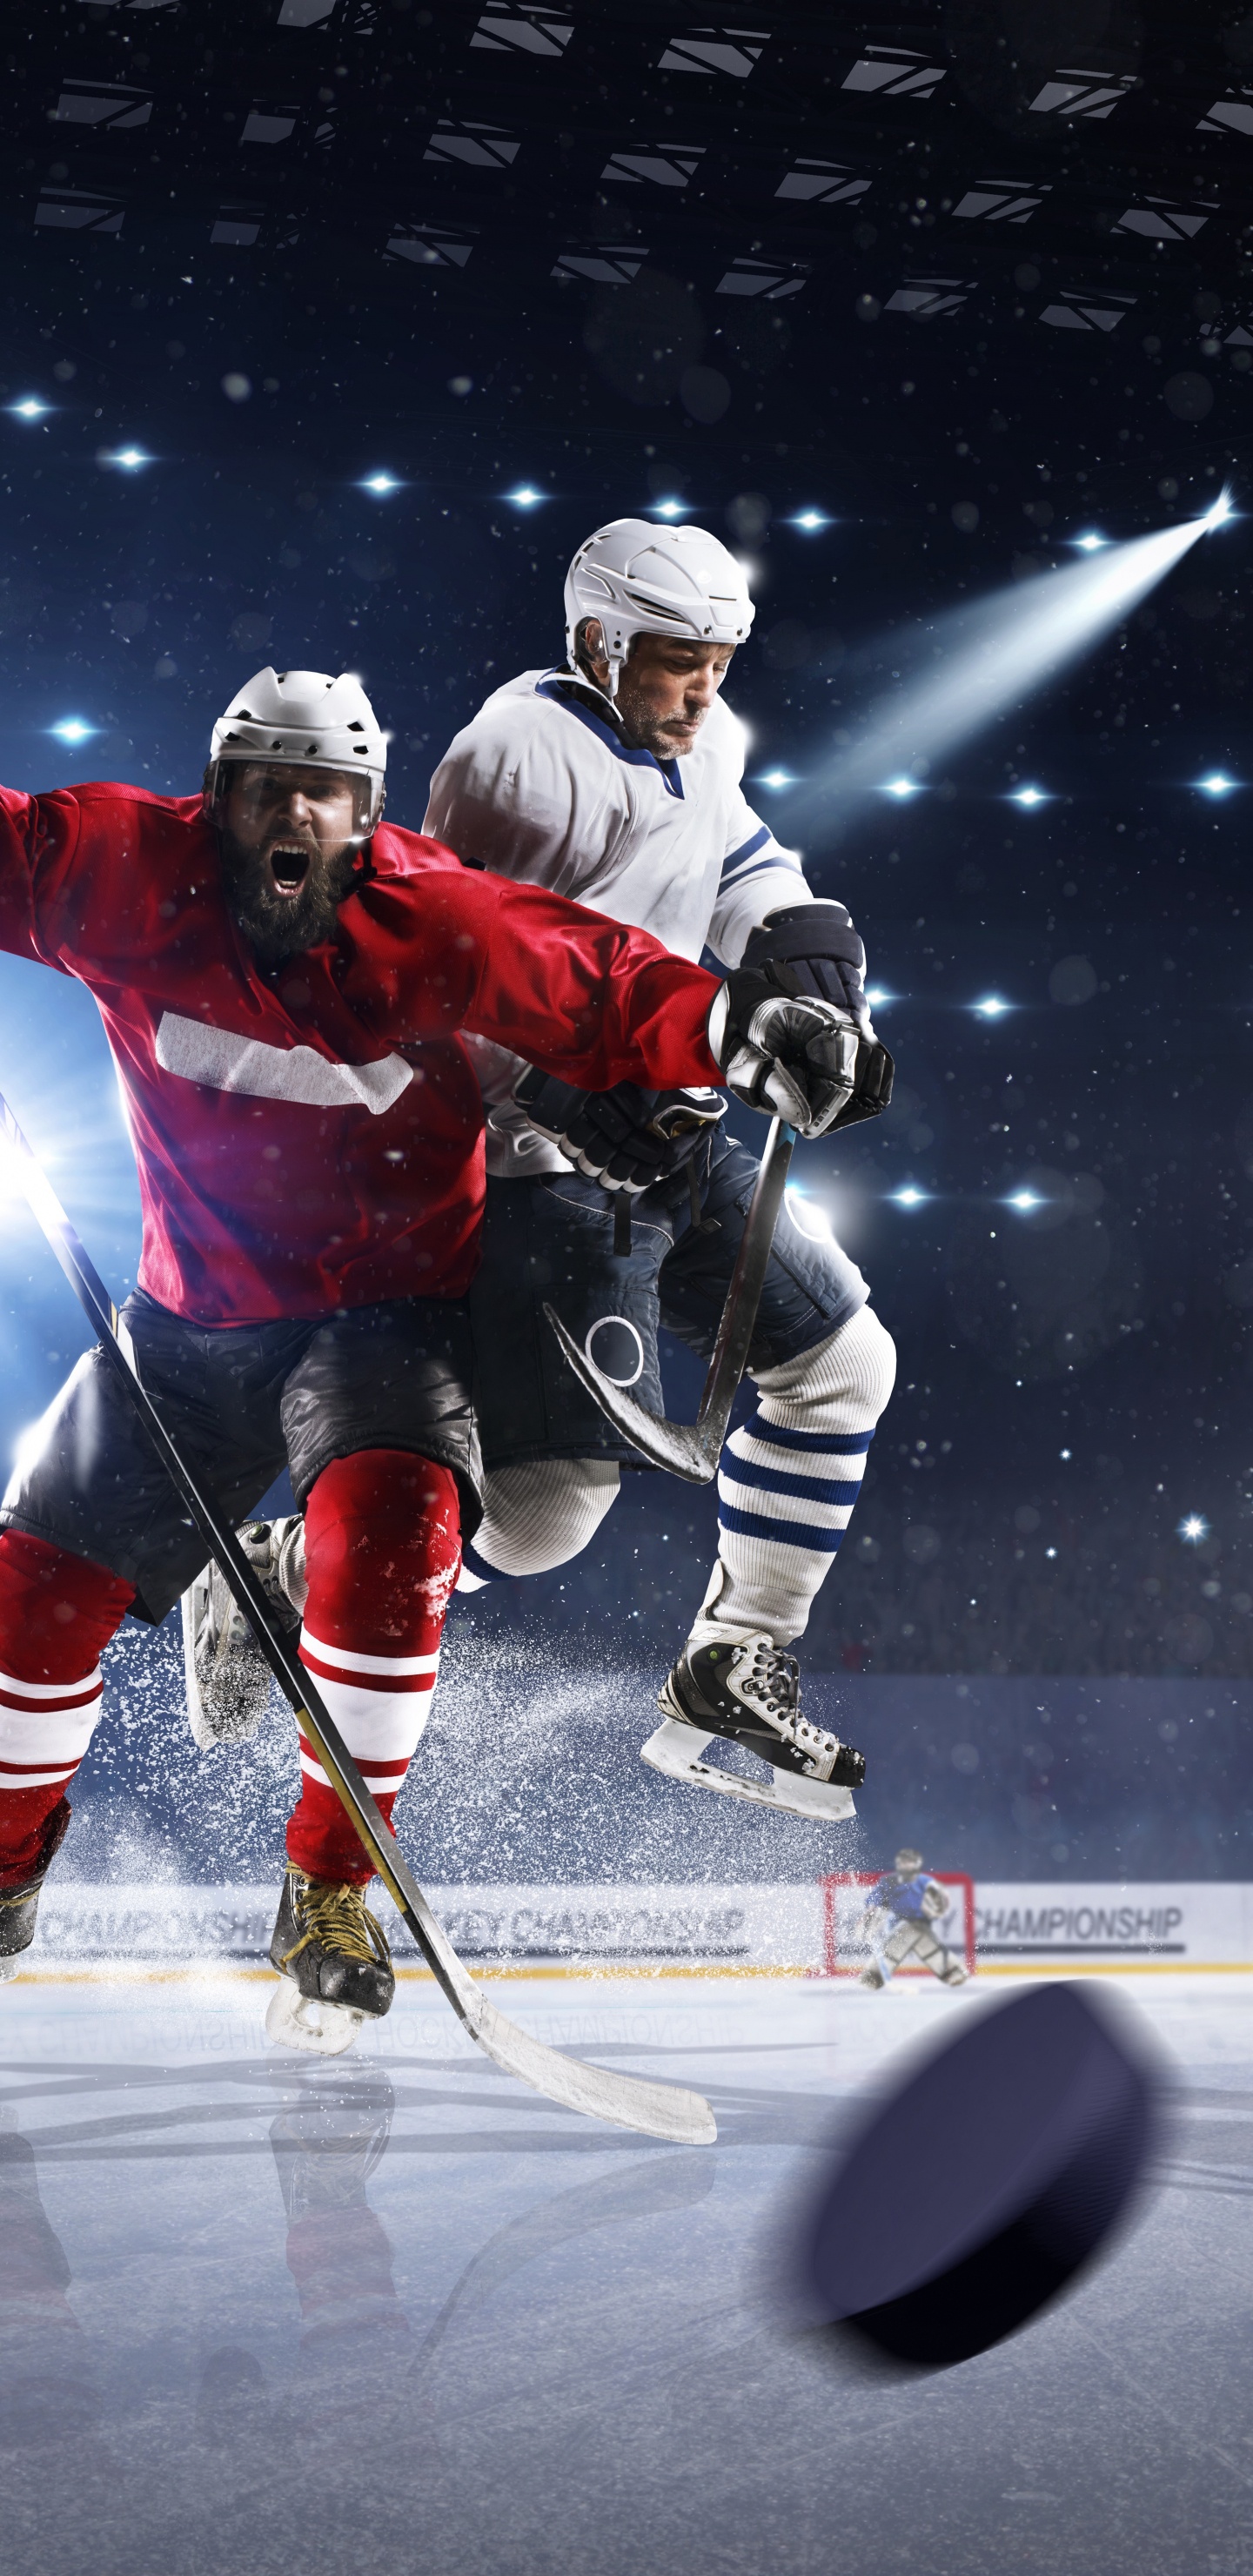 Ice Hockey Players on Ice Hockey Field. Wallpaper in 1440x2960 Resolution